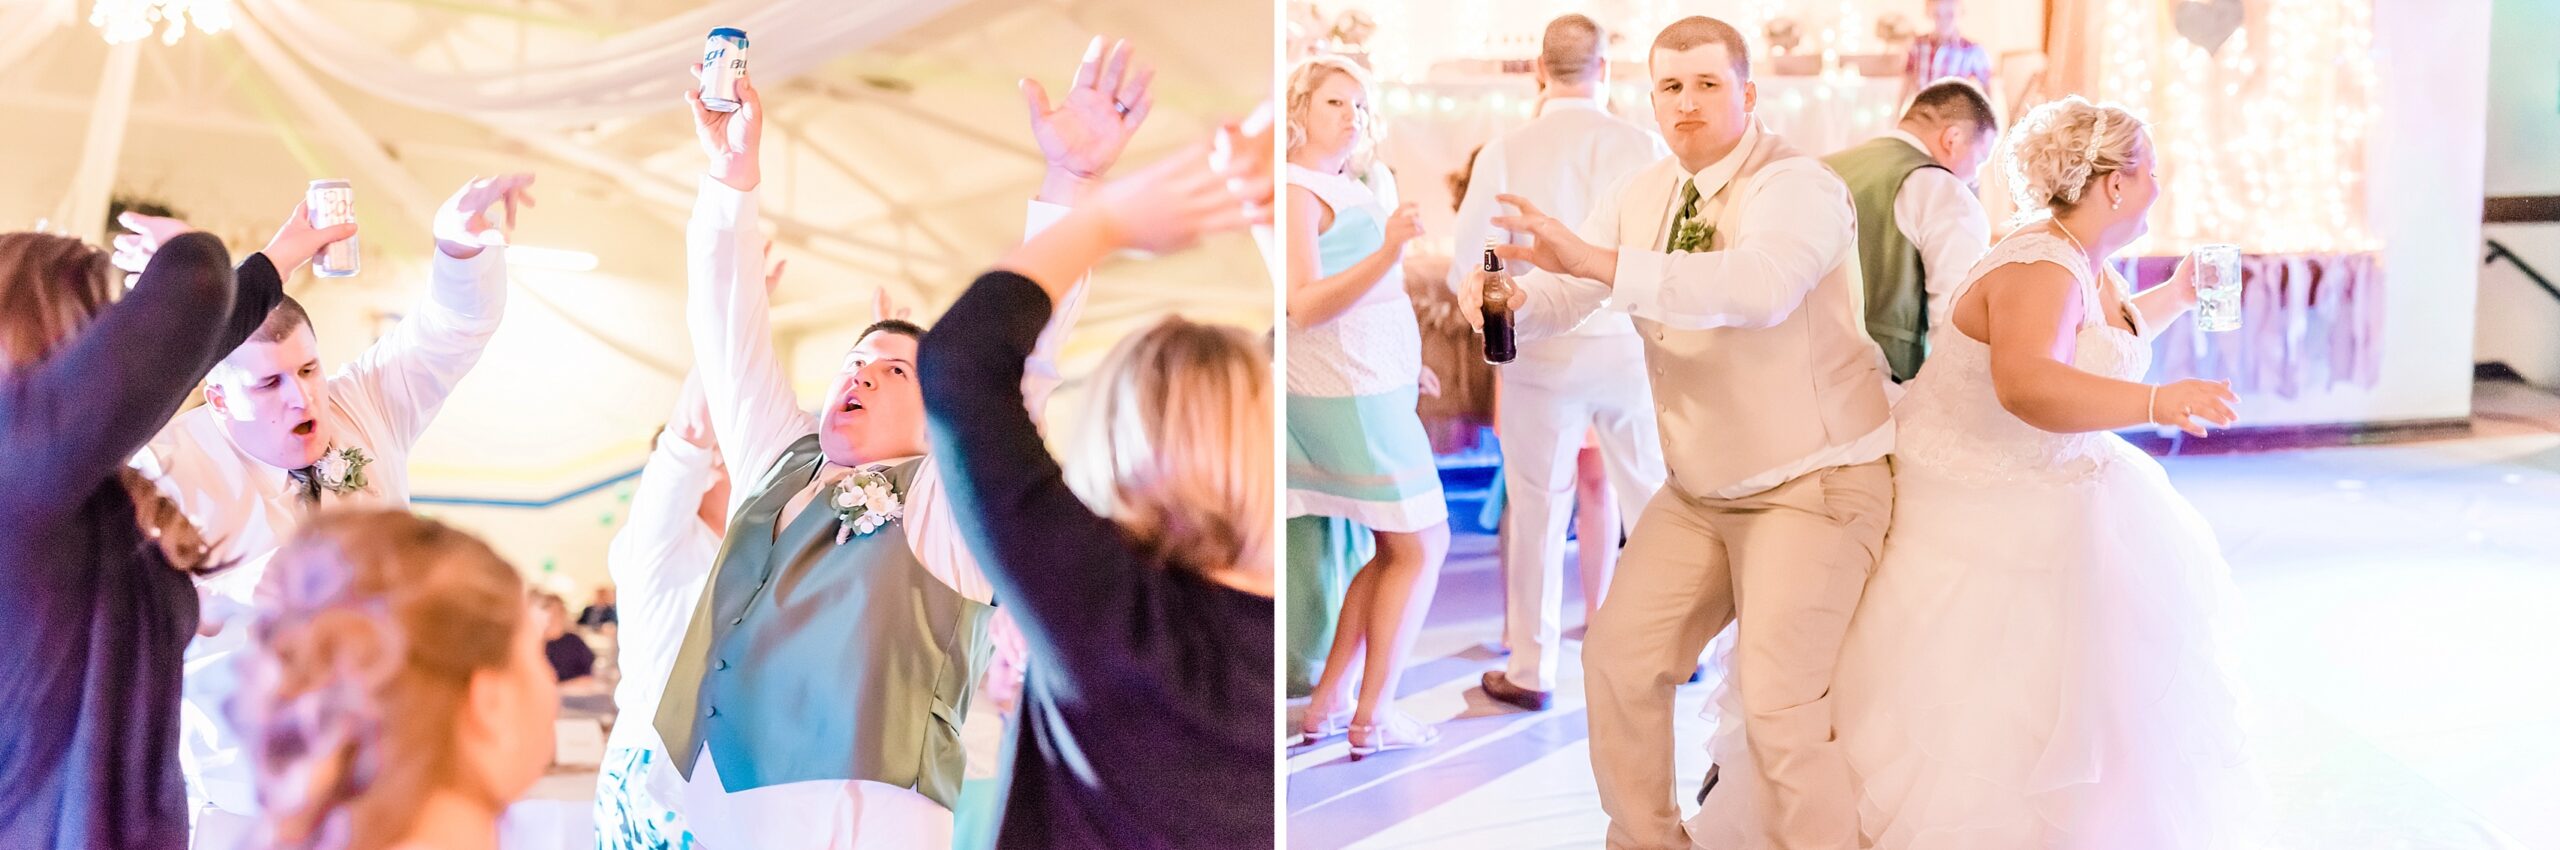 midwest wedding reception dancing